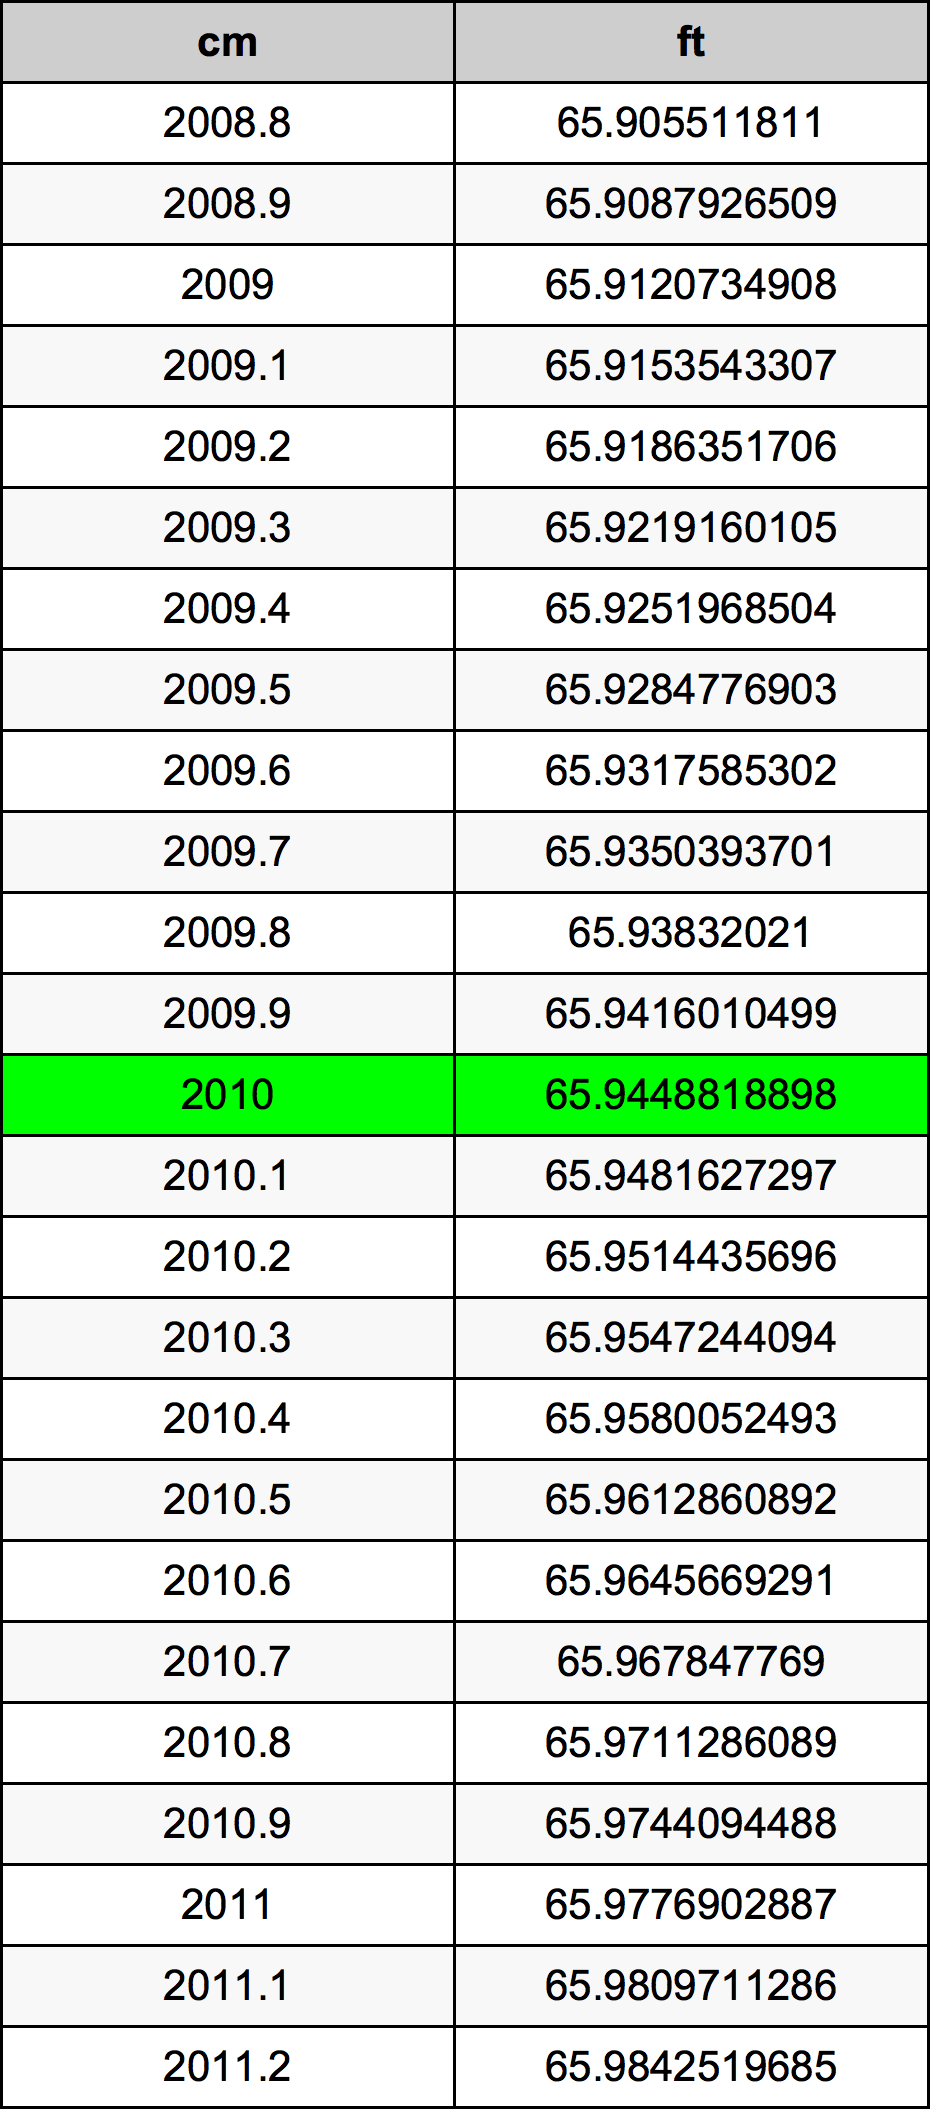 2010 Centimeter pretvorbena tabela